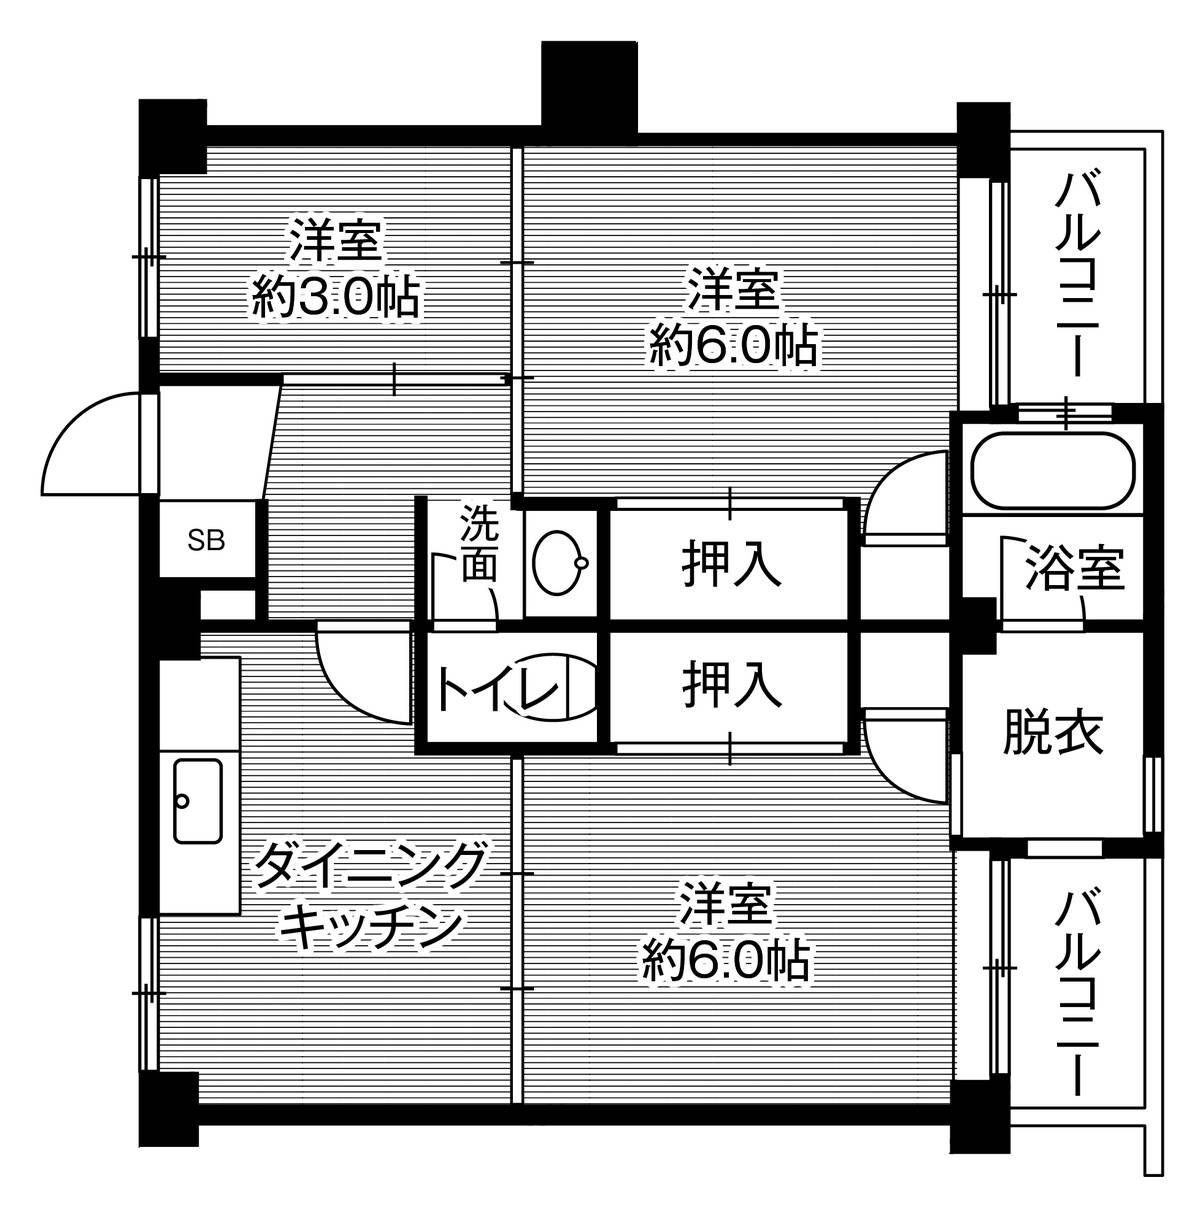 3DK floorplan of Village House Hagiwara in Yahatanishi-ku